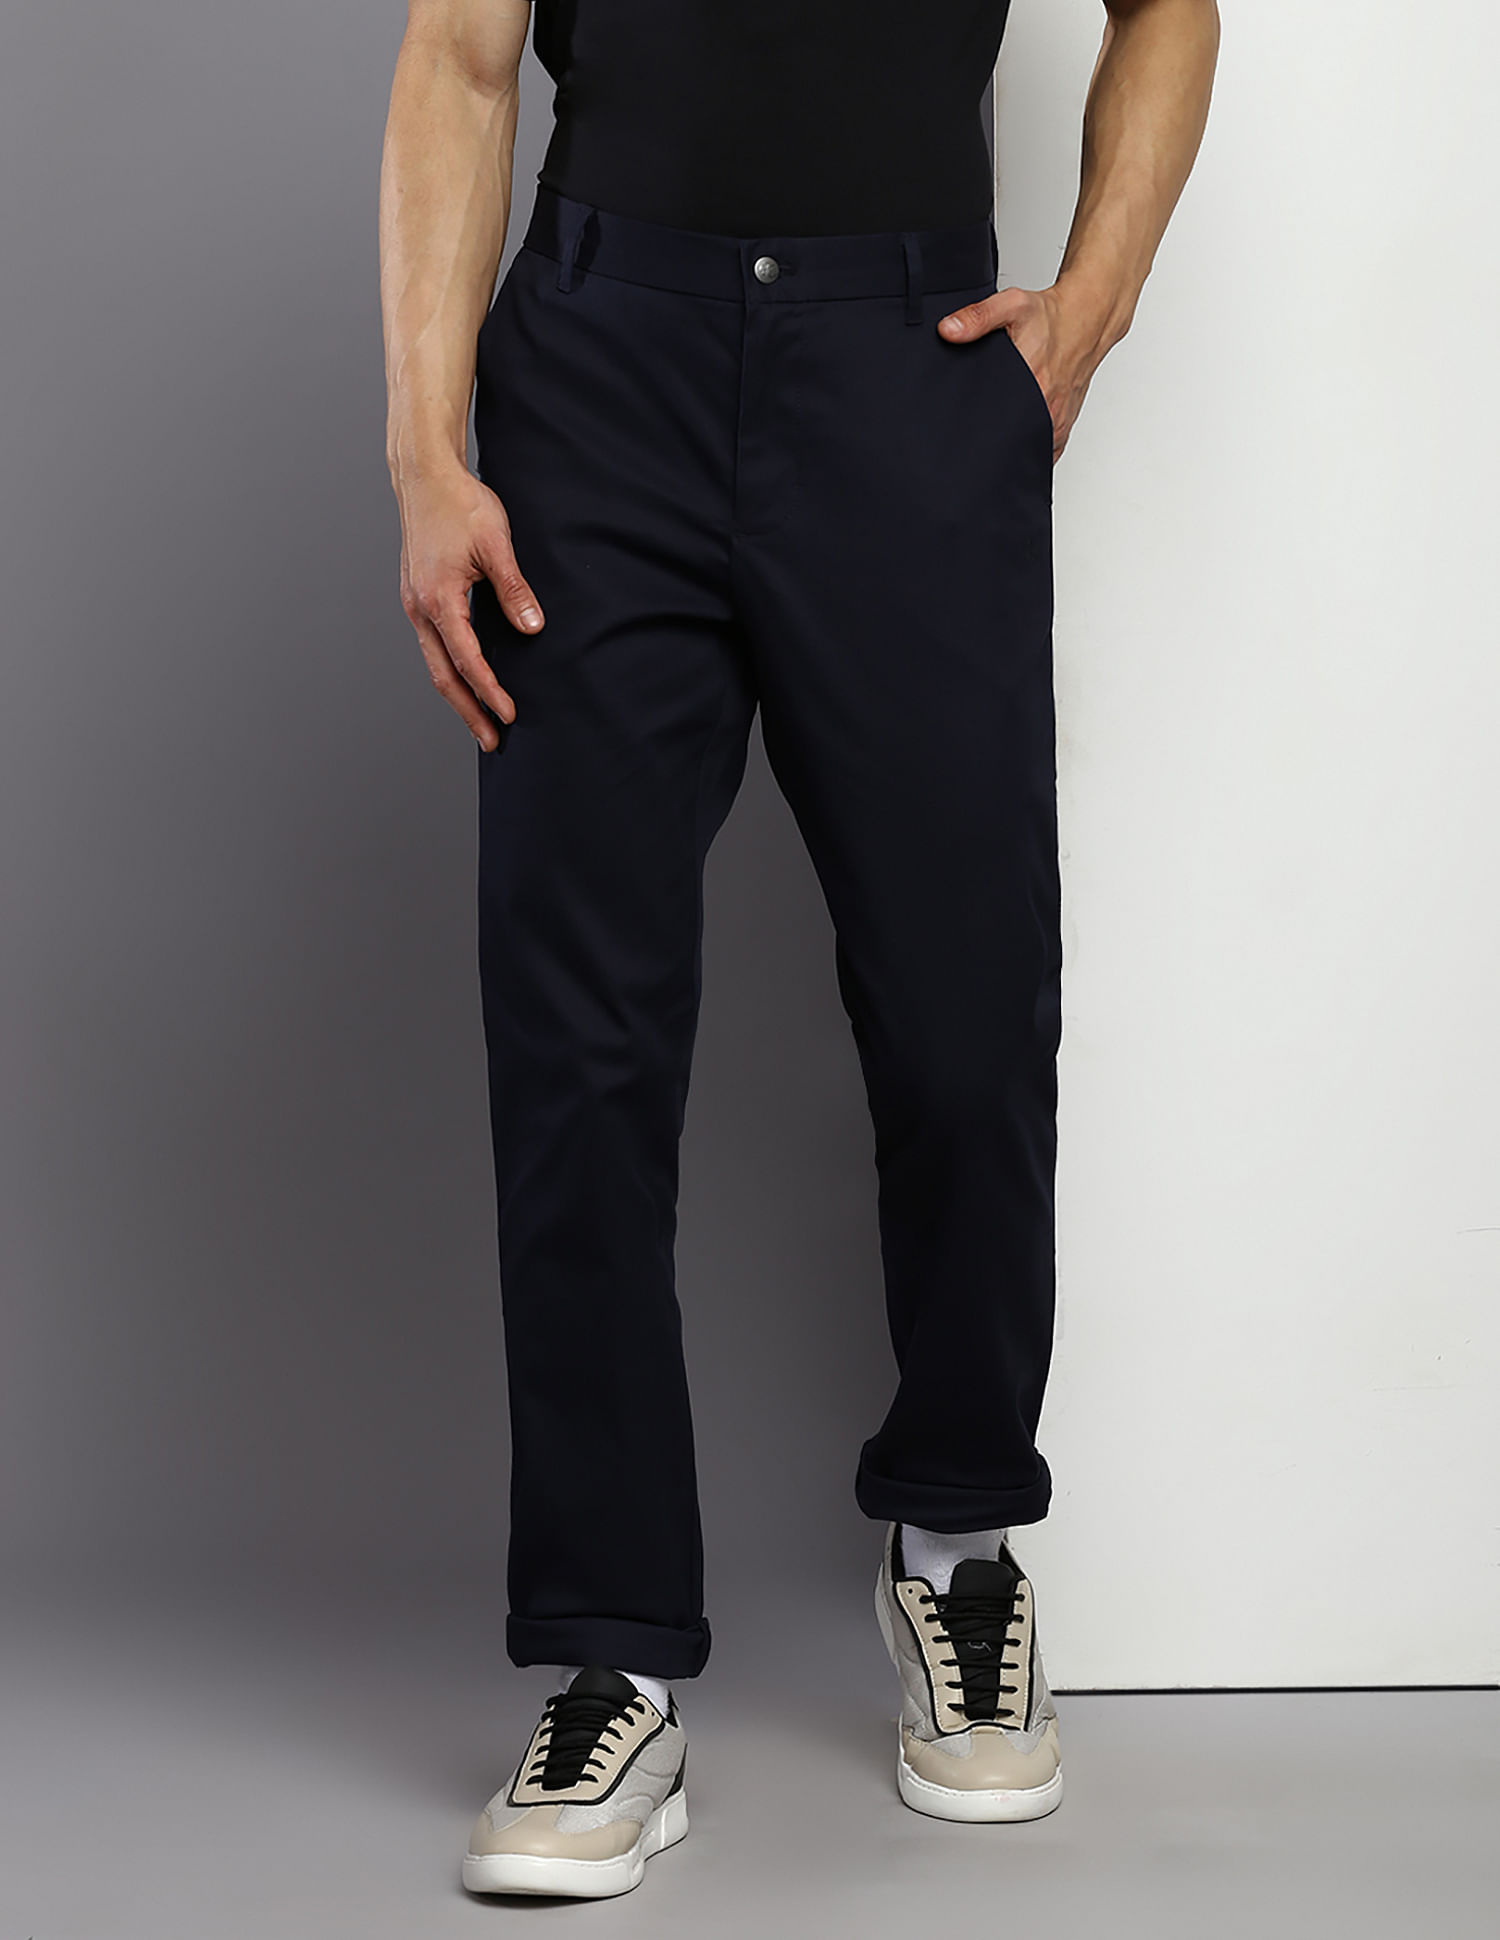 Buy Black Trousers  Pants for Women by Calvin Klein Jeans Online  Ajiocom